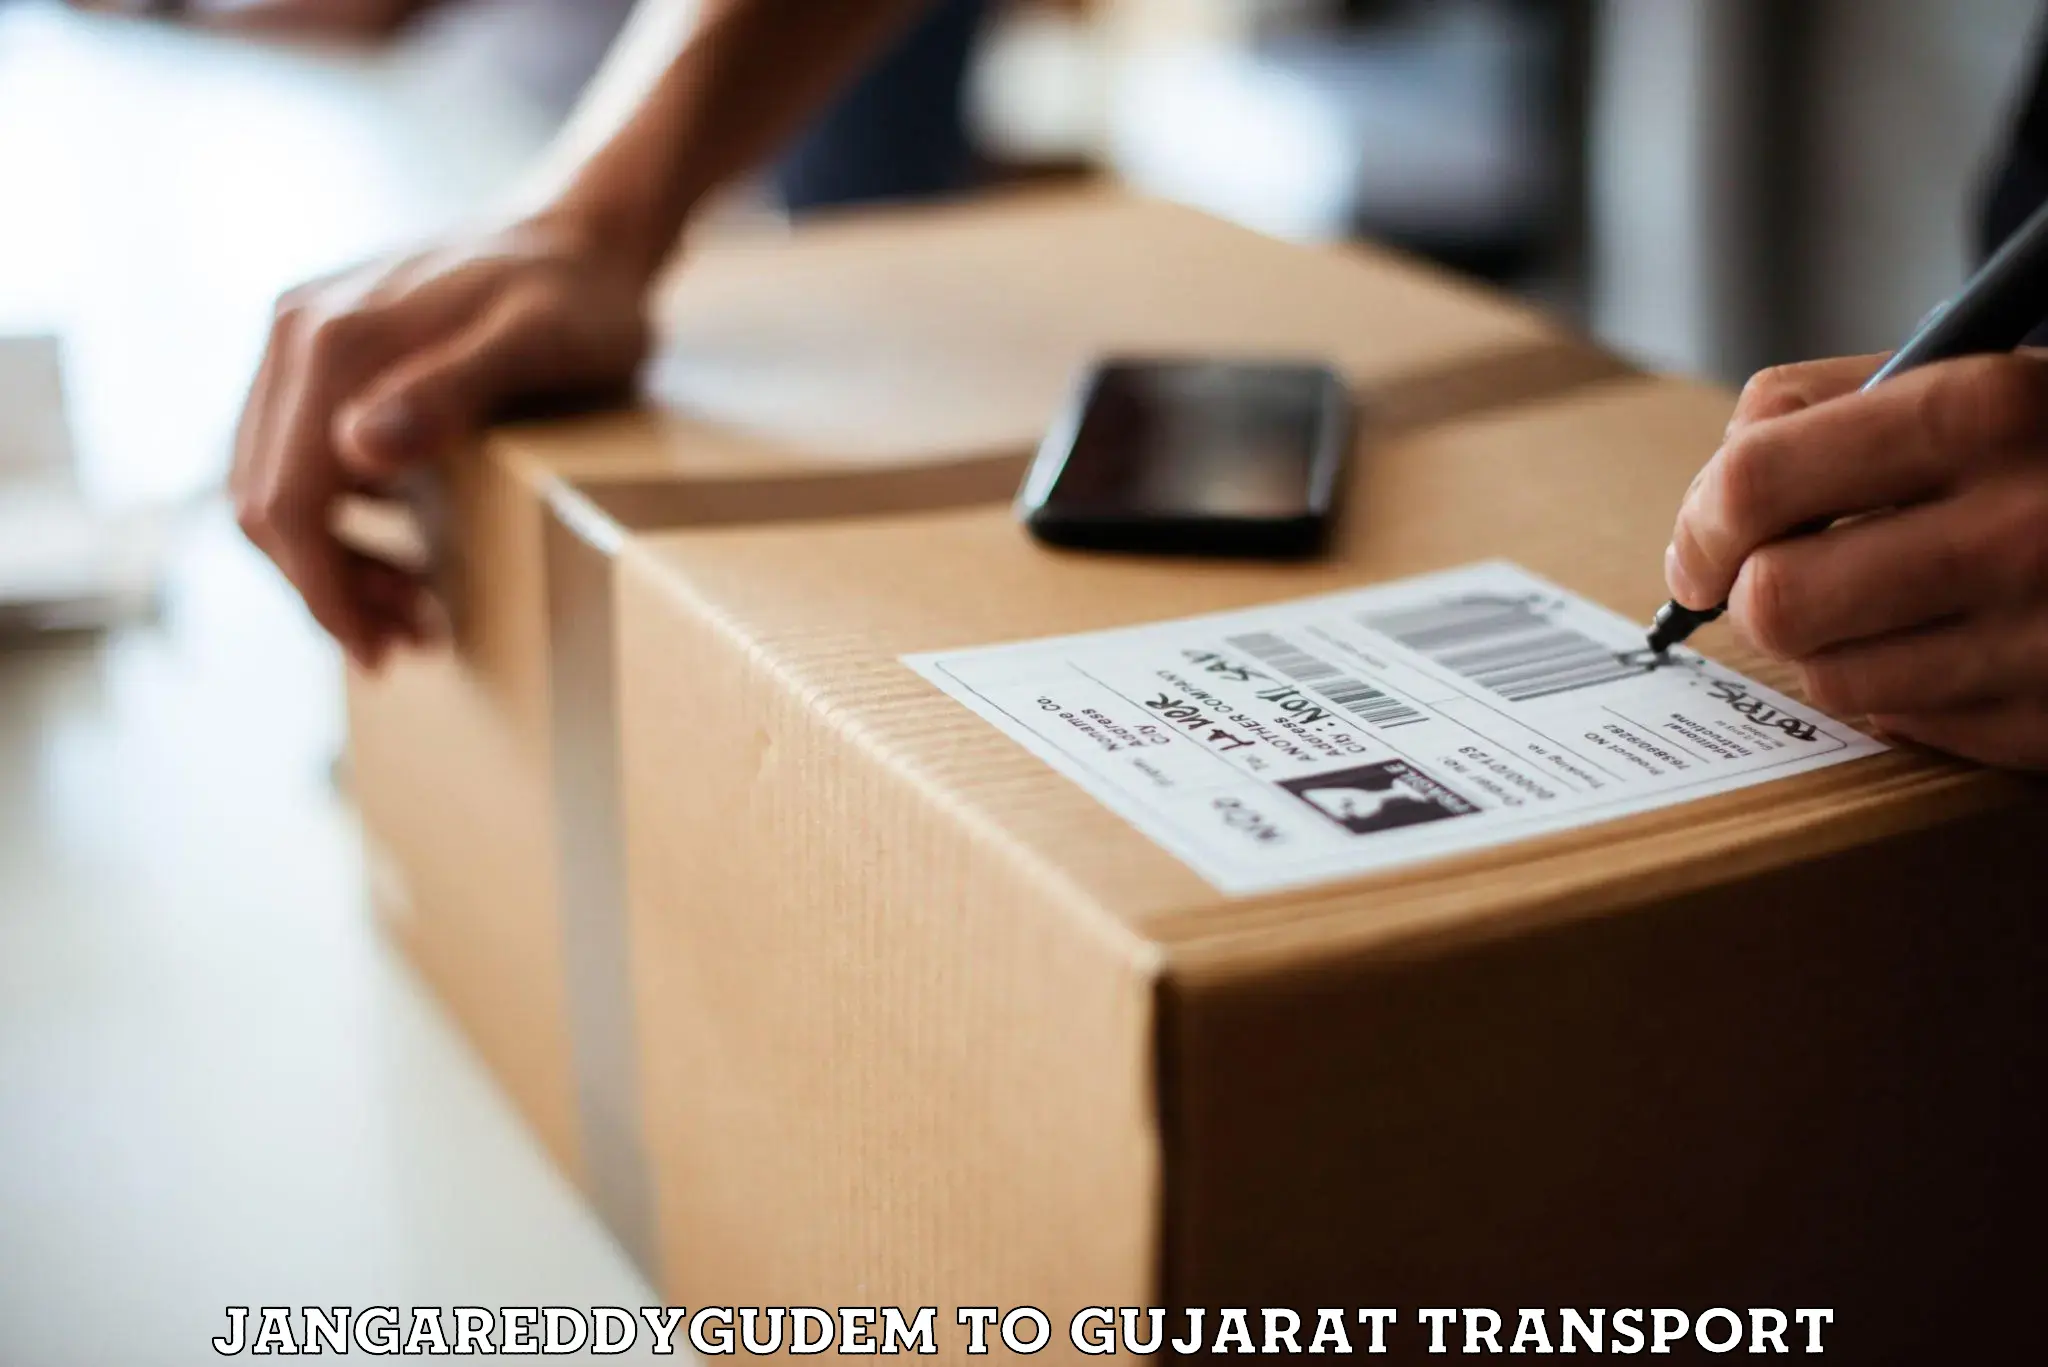 Furniture transport service Jangareddygudem to Gujarat